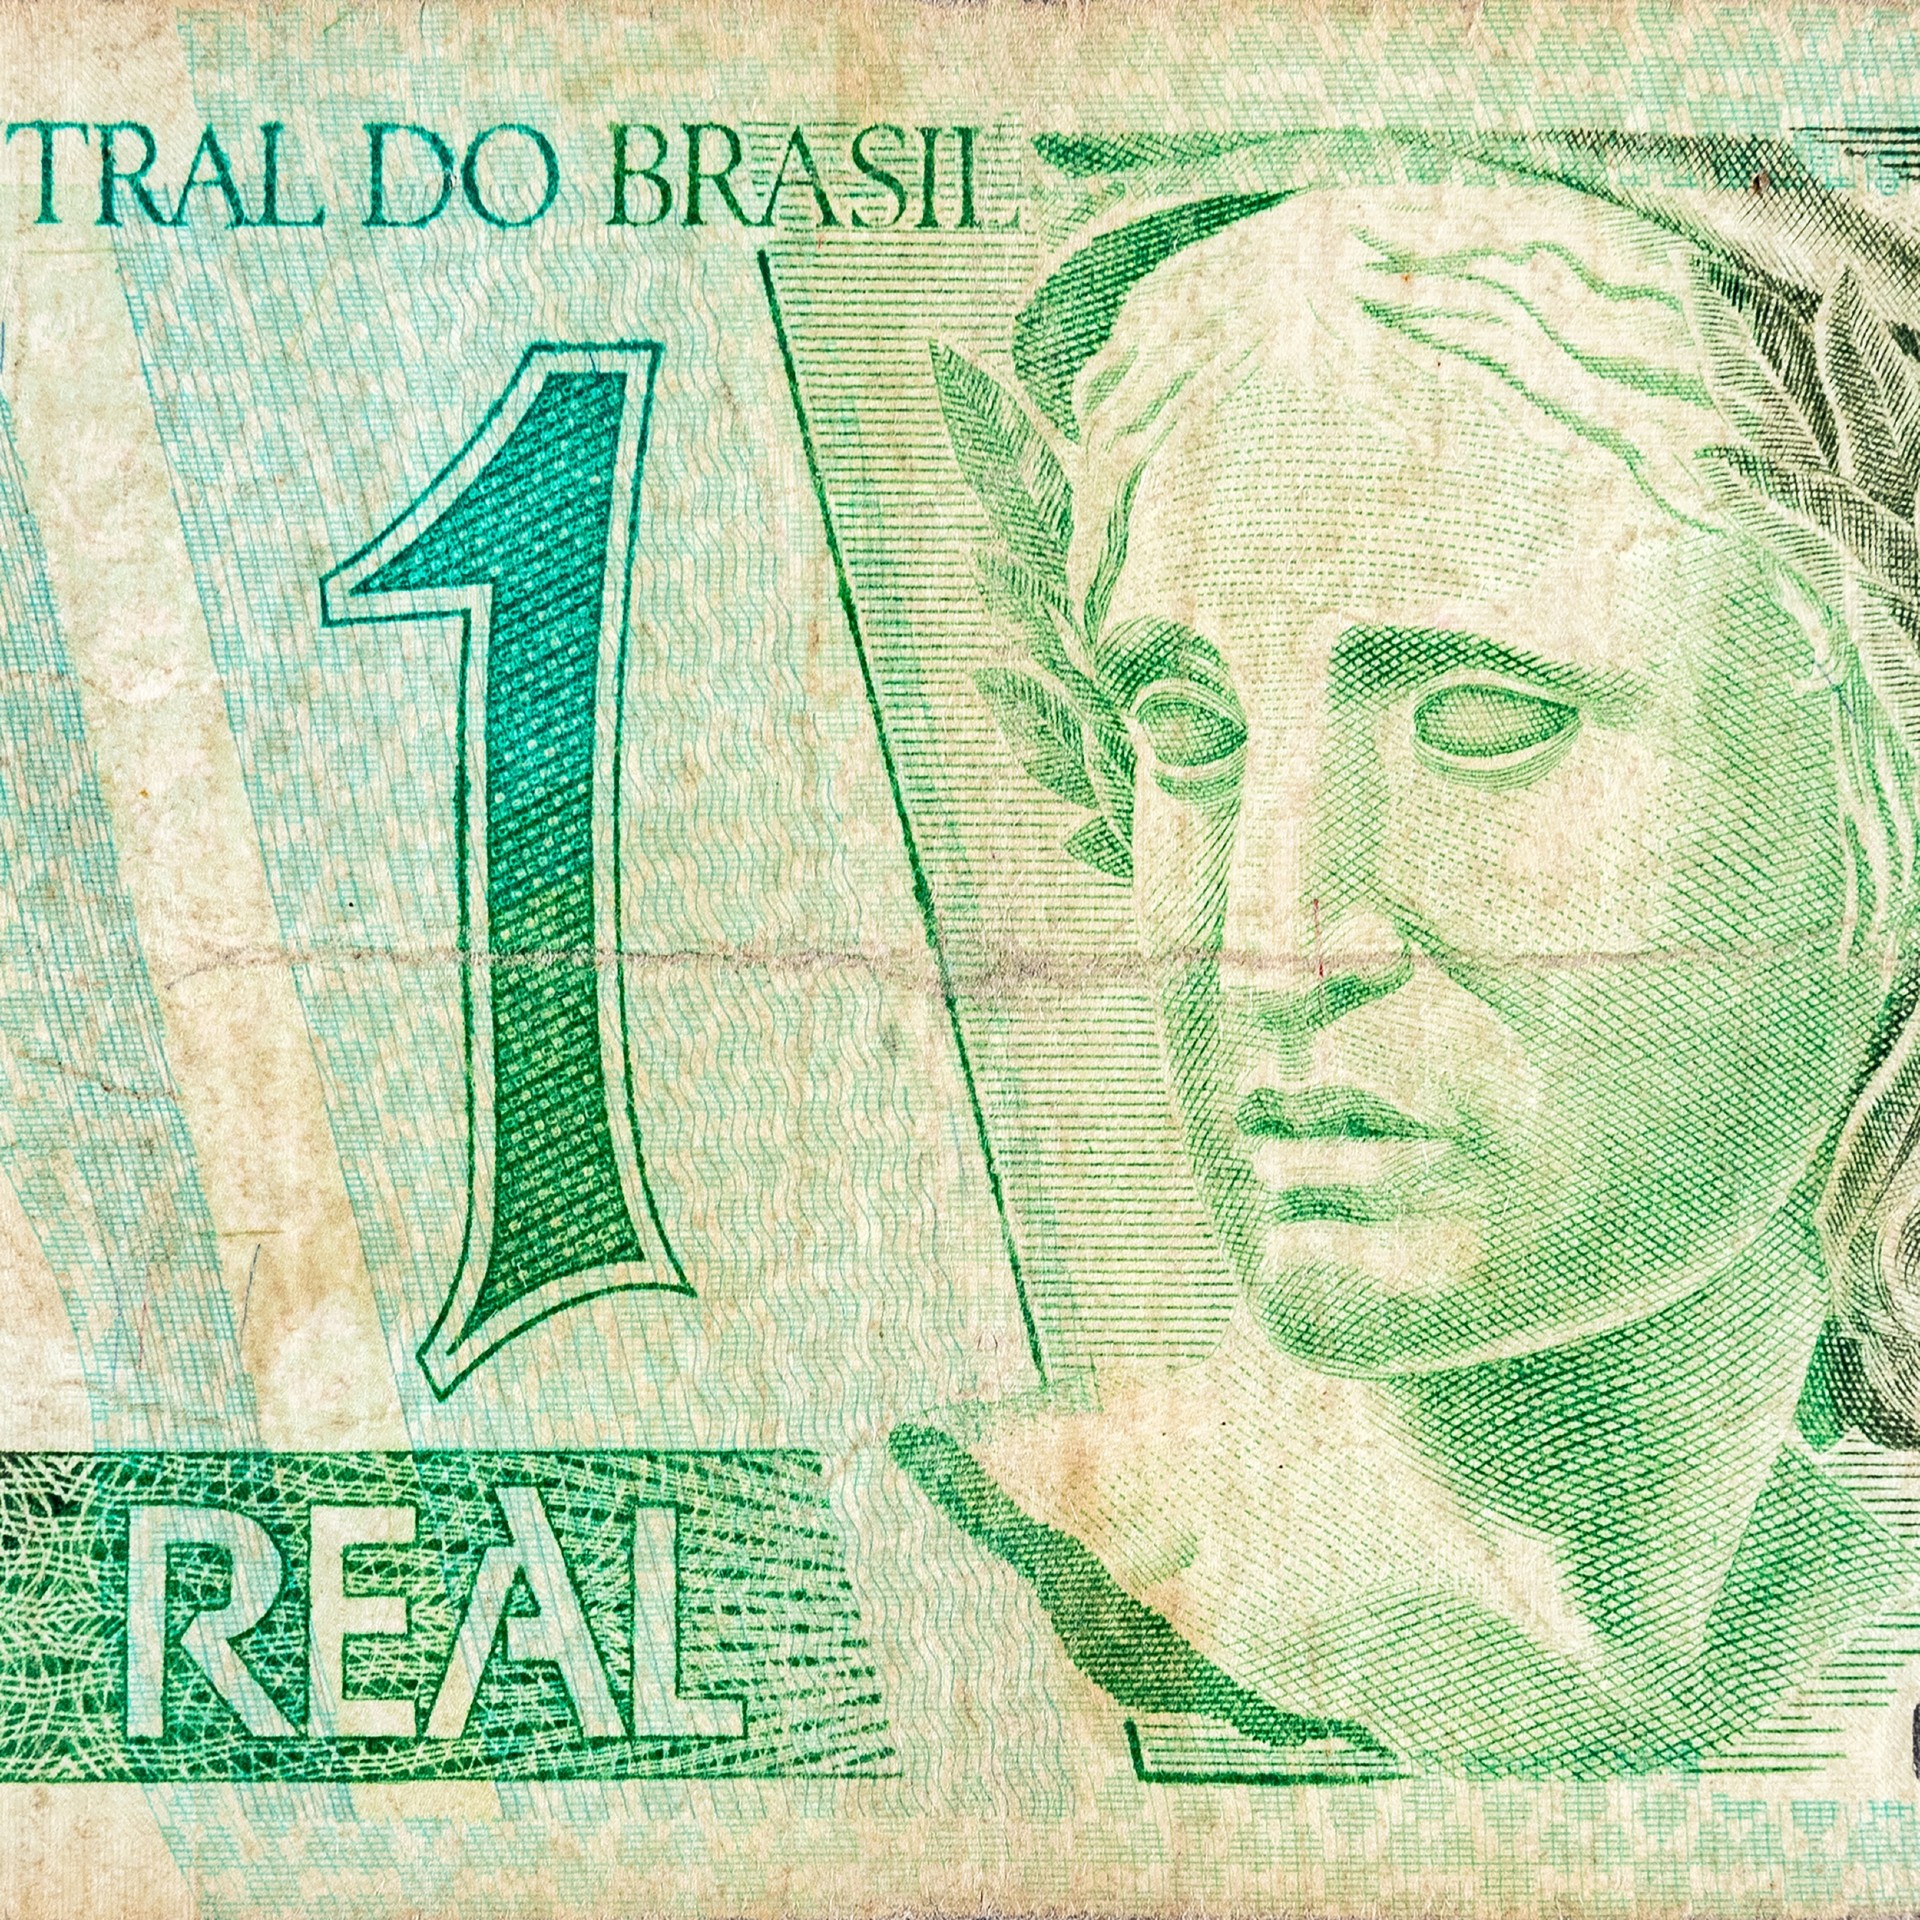 валюта бразилии